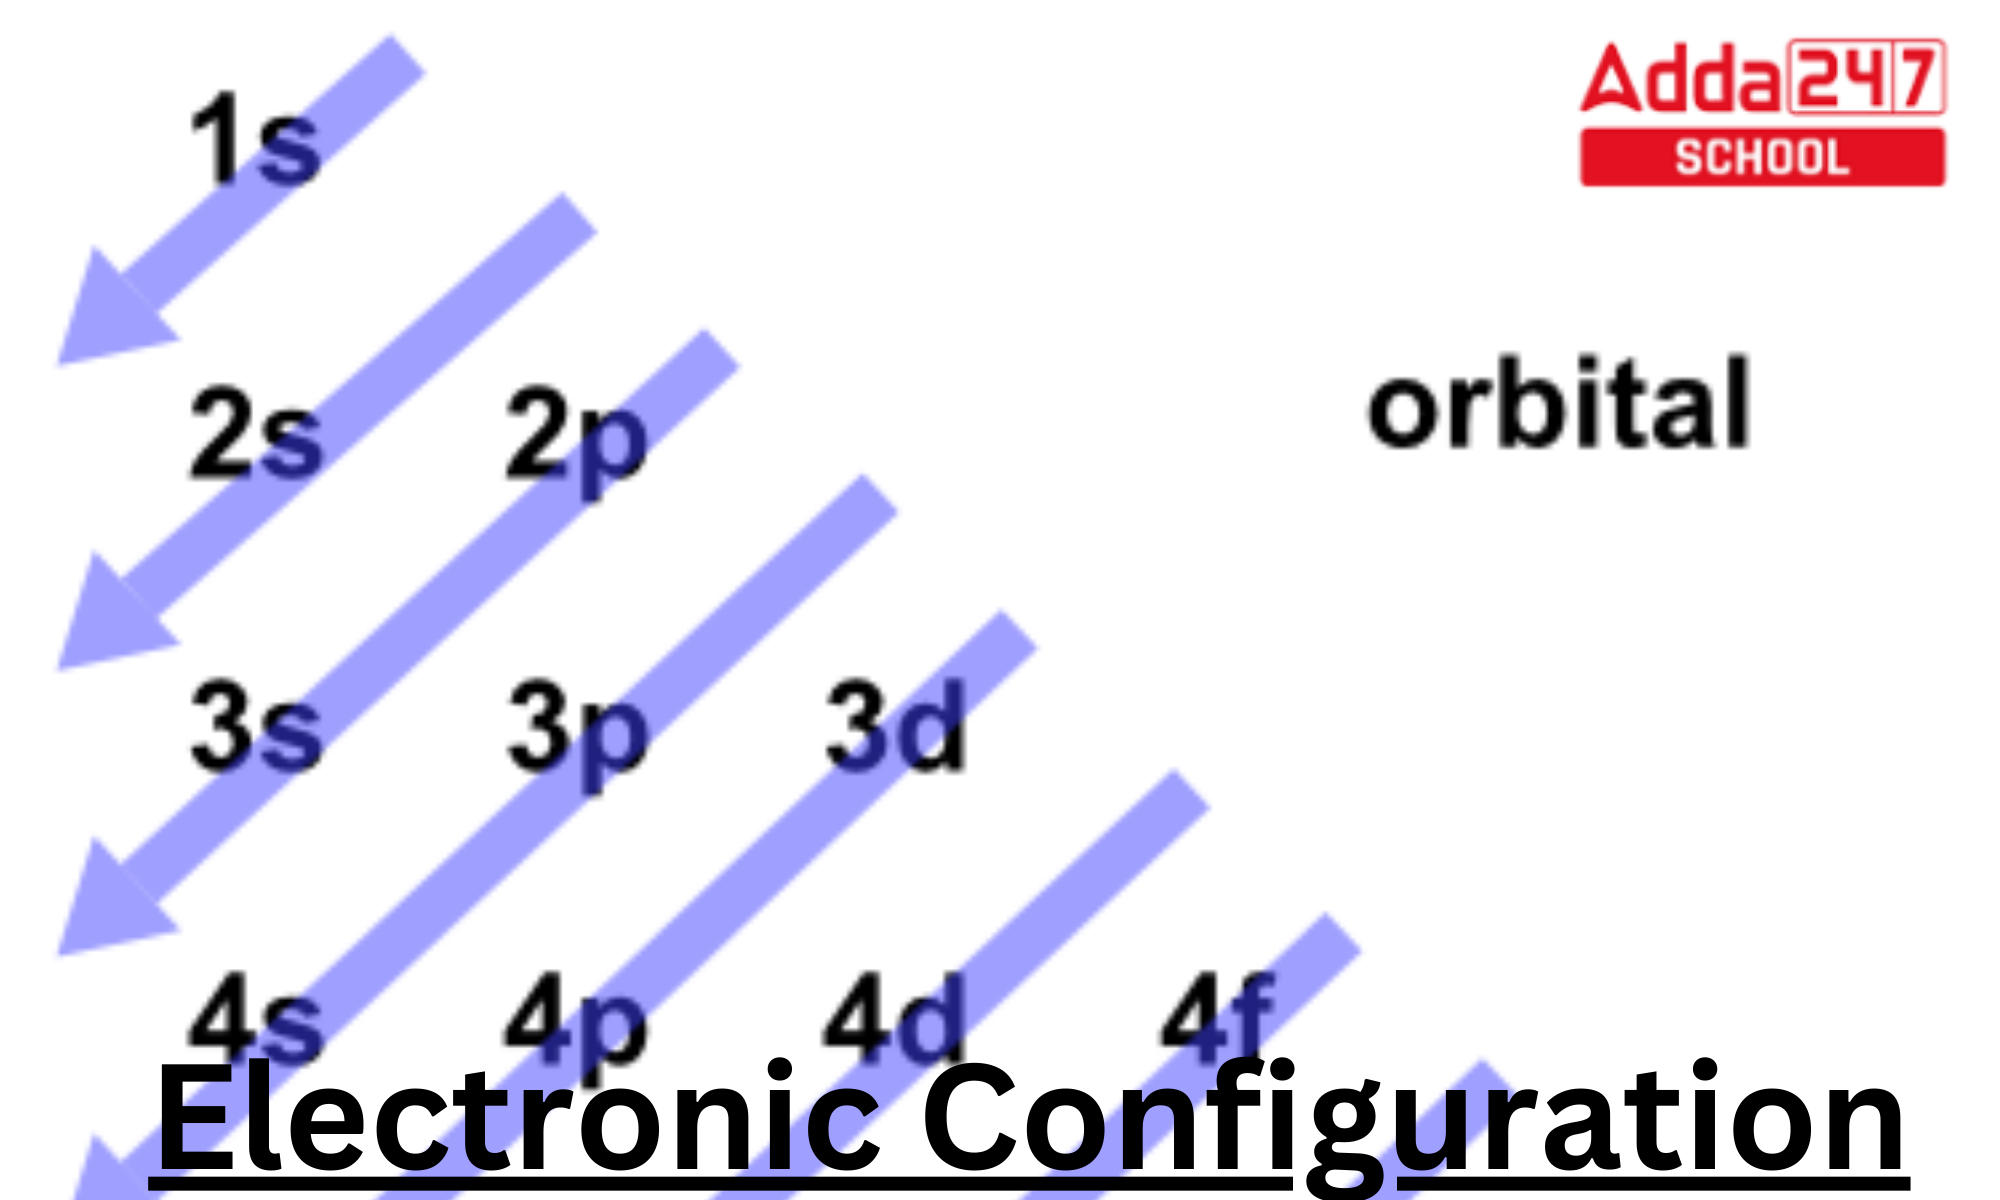 Electron Configuration of Elements